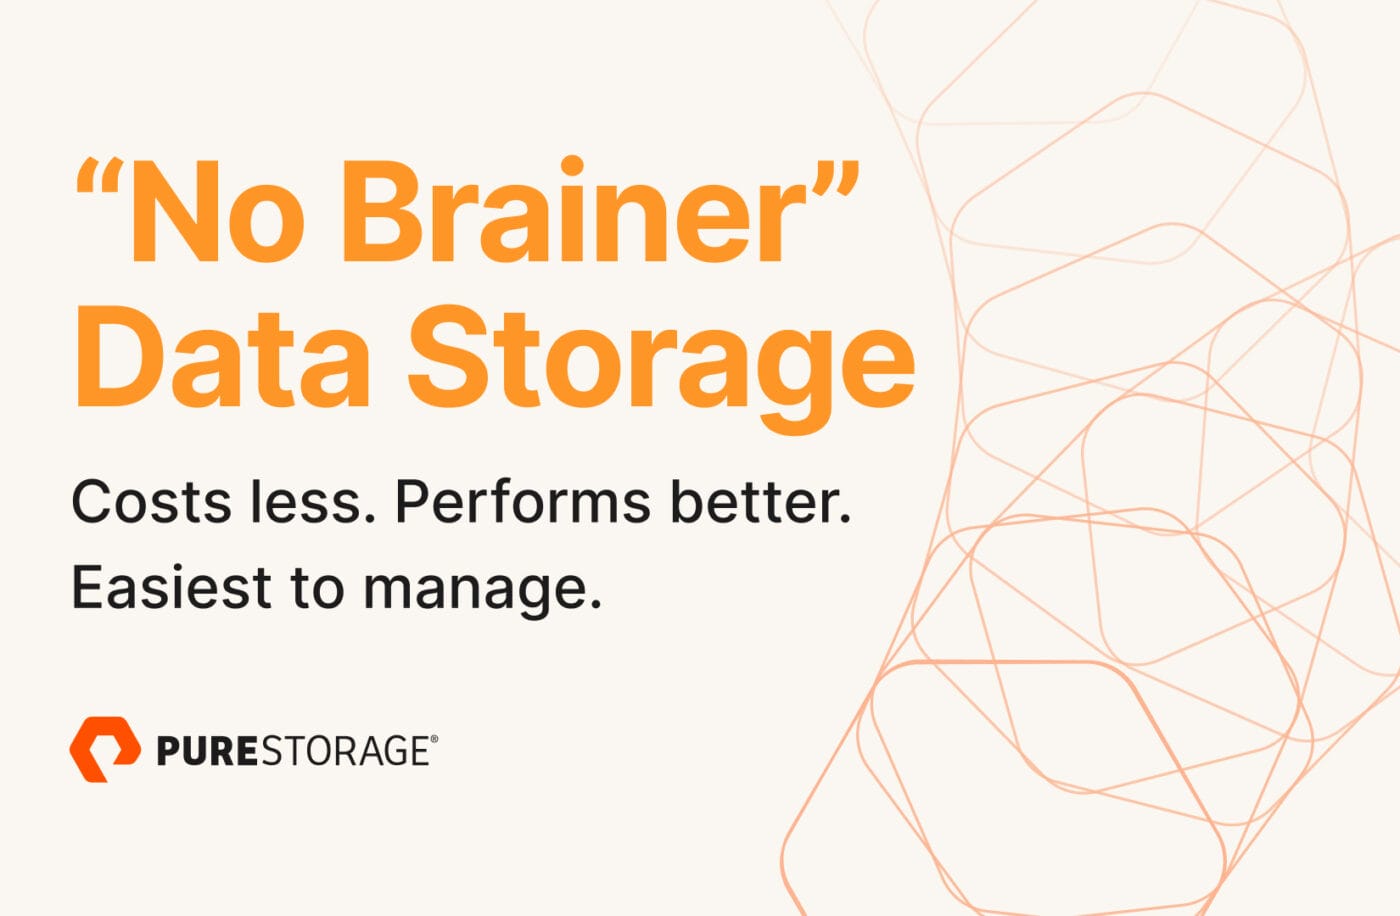 The future of data storage